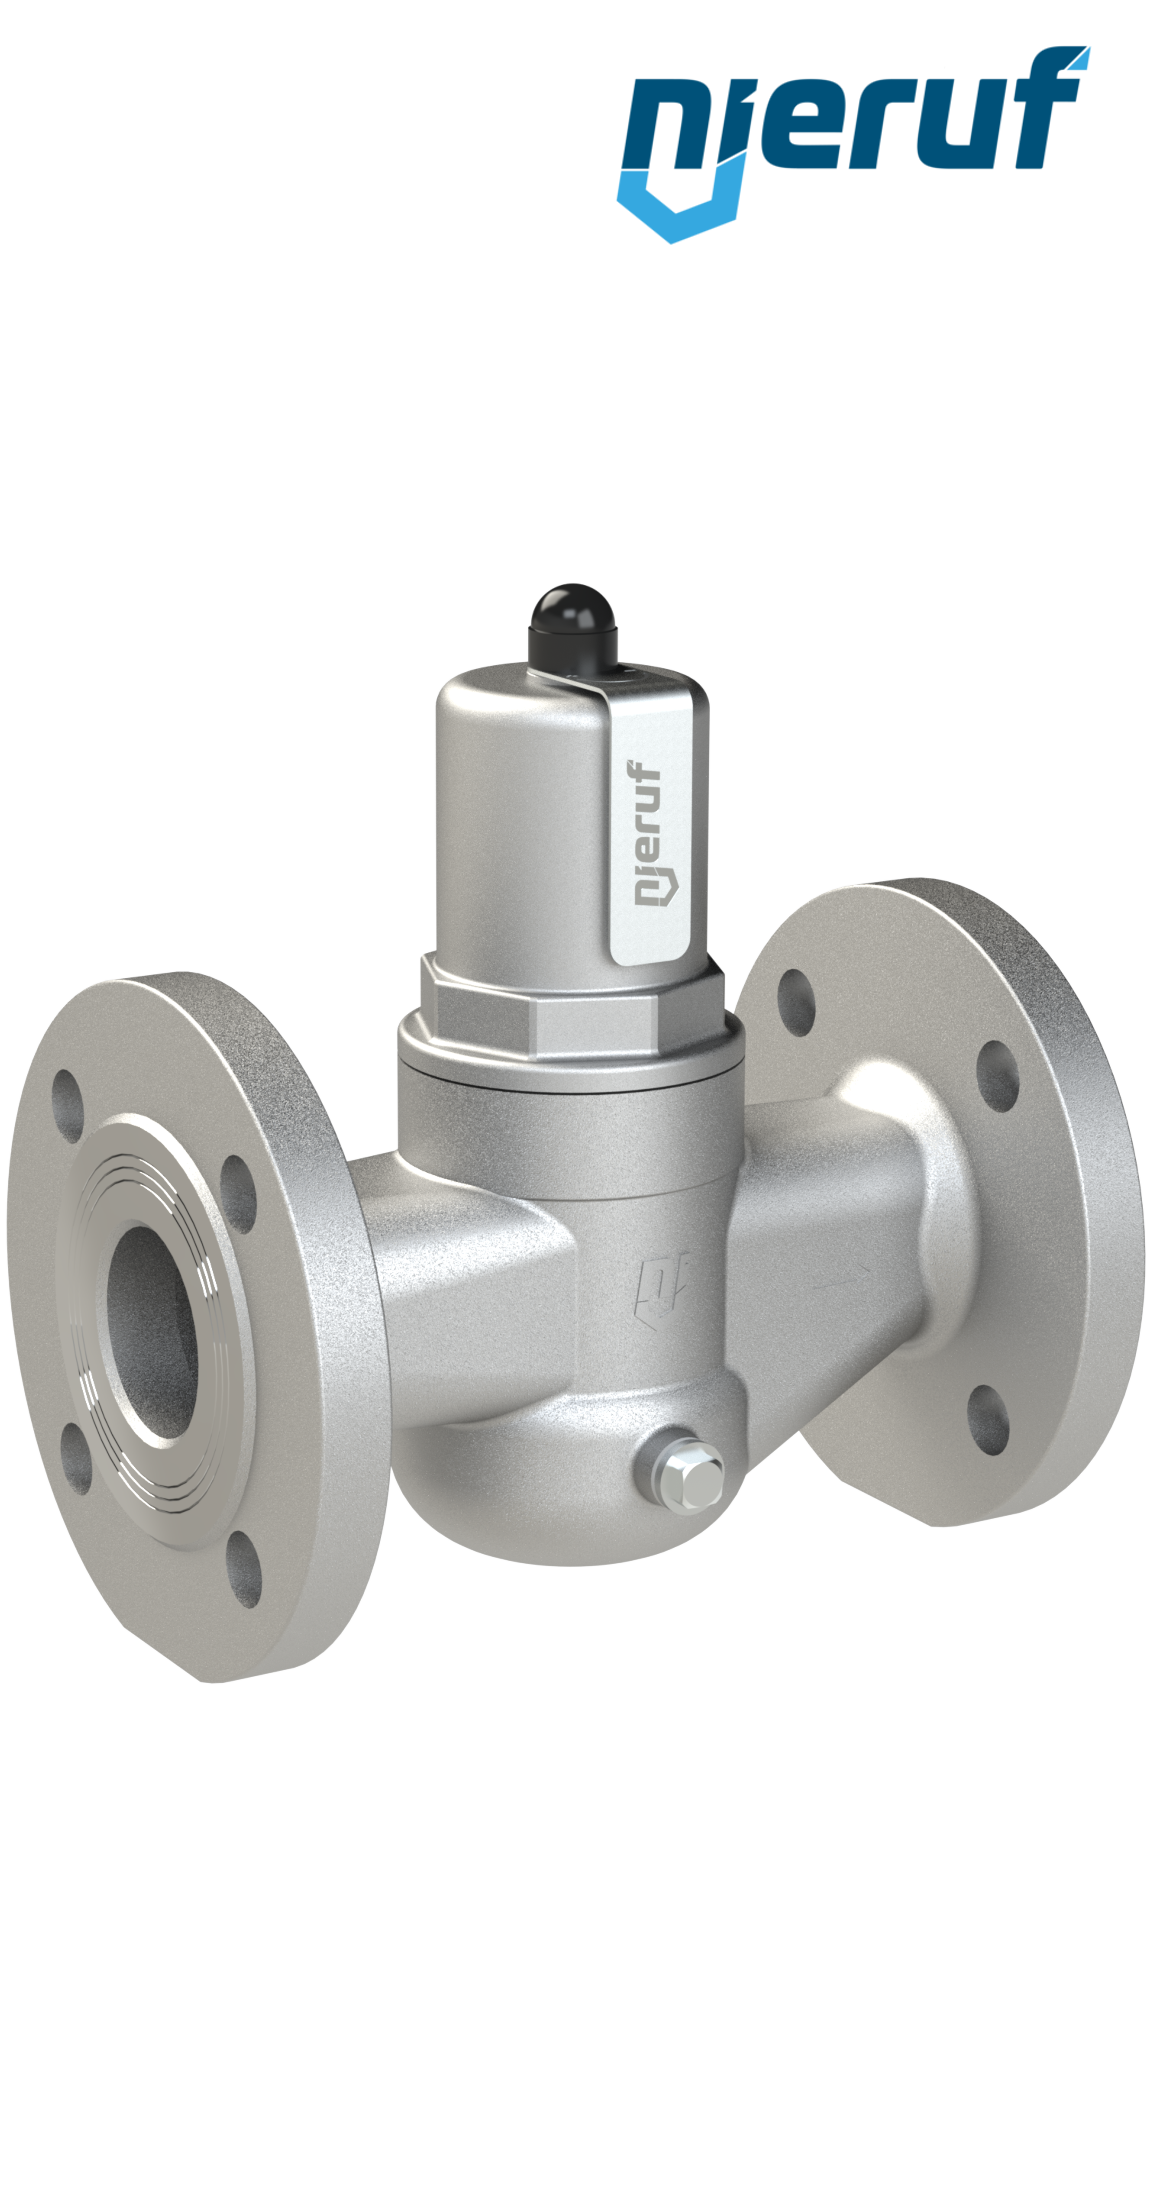 Flange-pressure reducing valve DN 20 PN40 DM07 stainless steel EPDM 1.0 - 8.0 bar